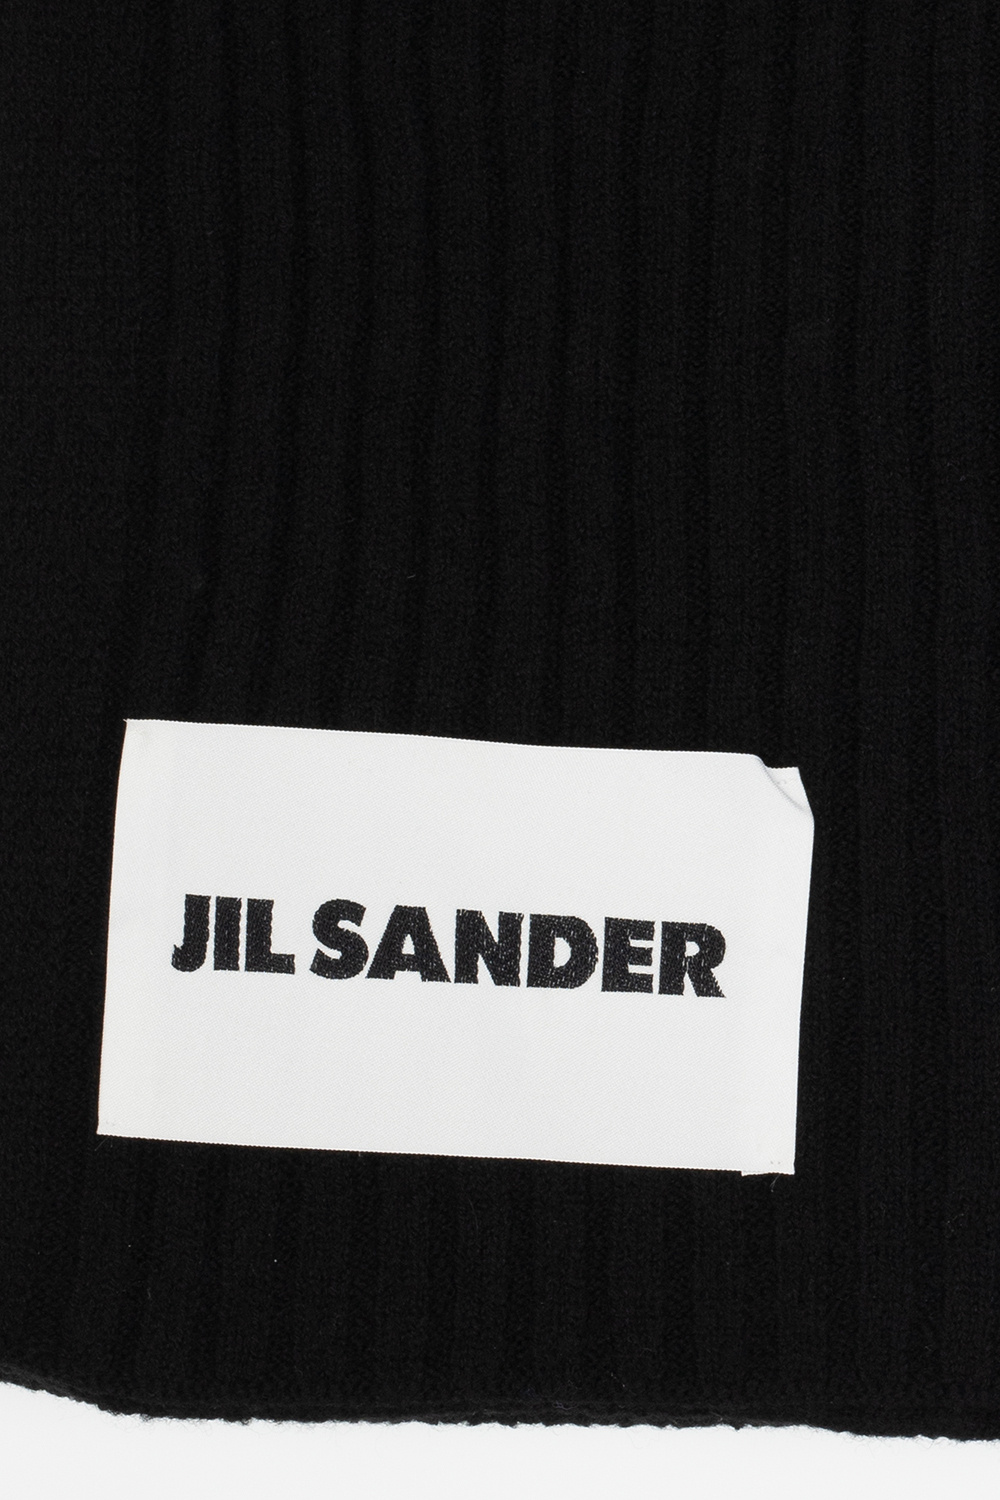 JIL SANDER Schal scarf